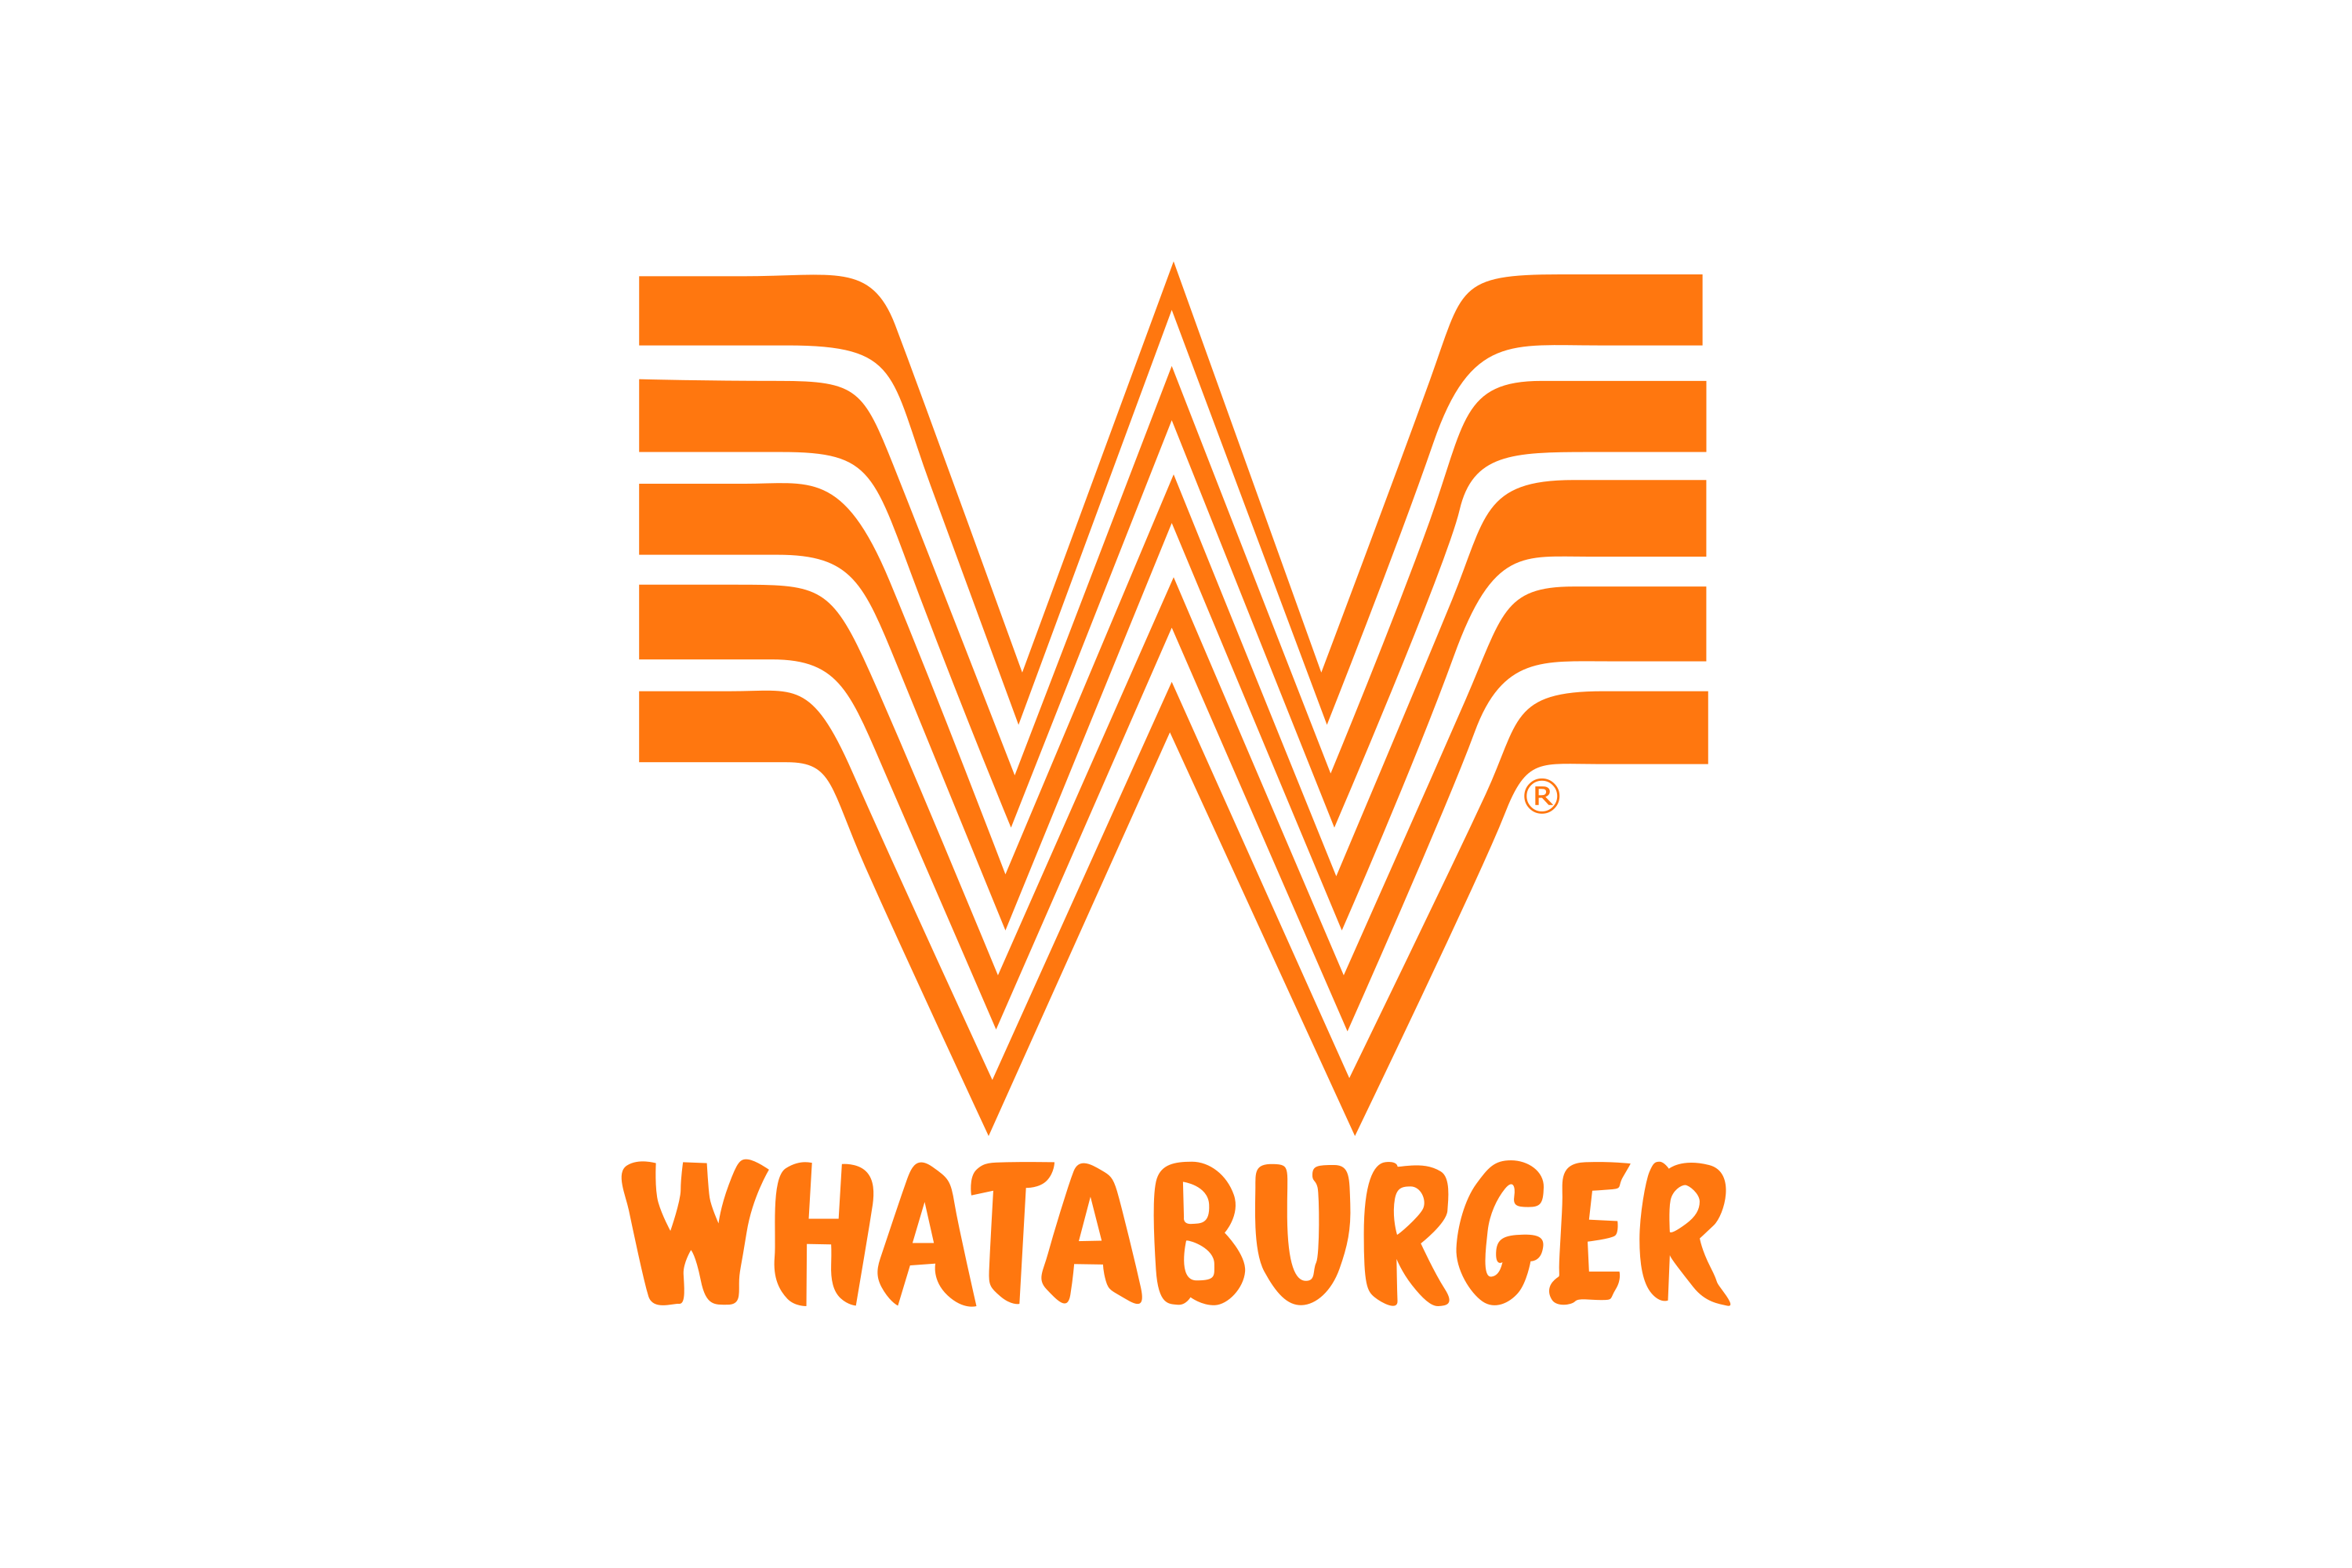 Download Whataburger Logo in SVG Vector or PNG File Format ...